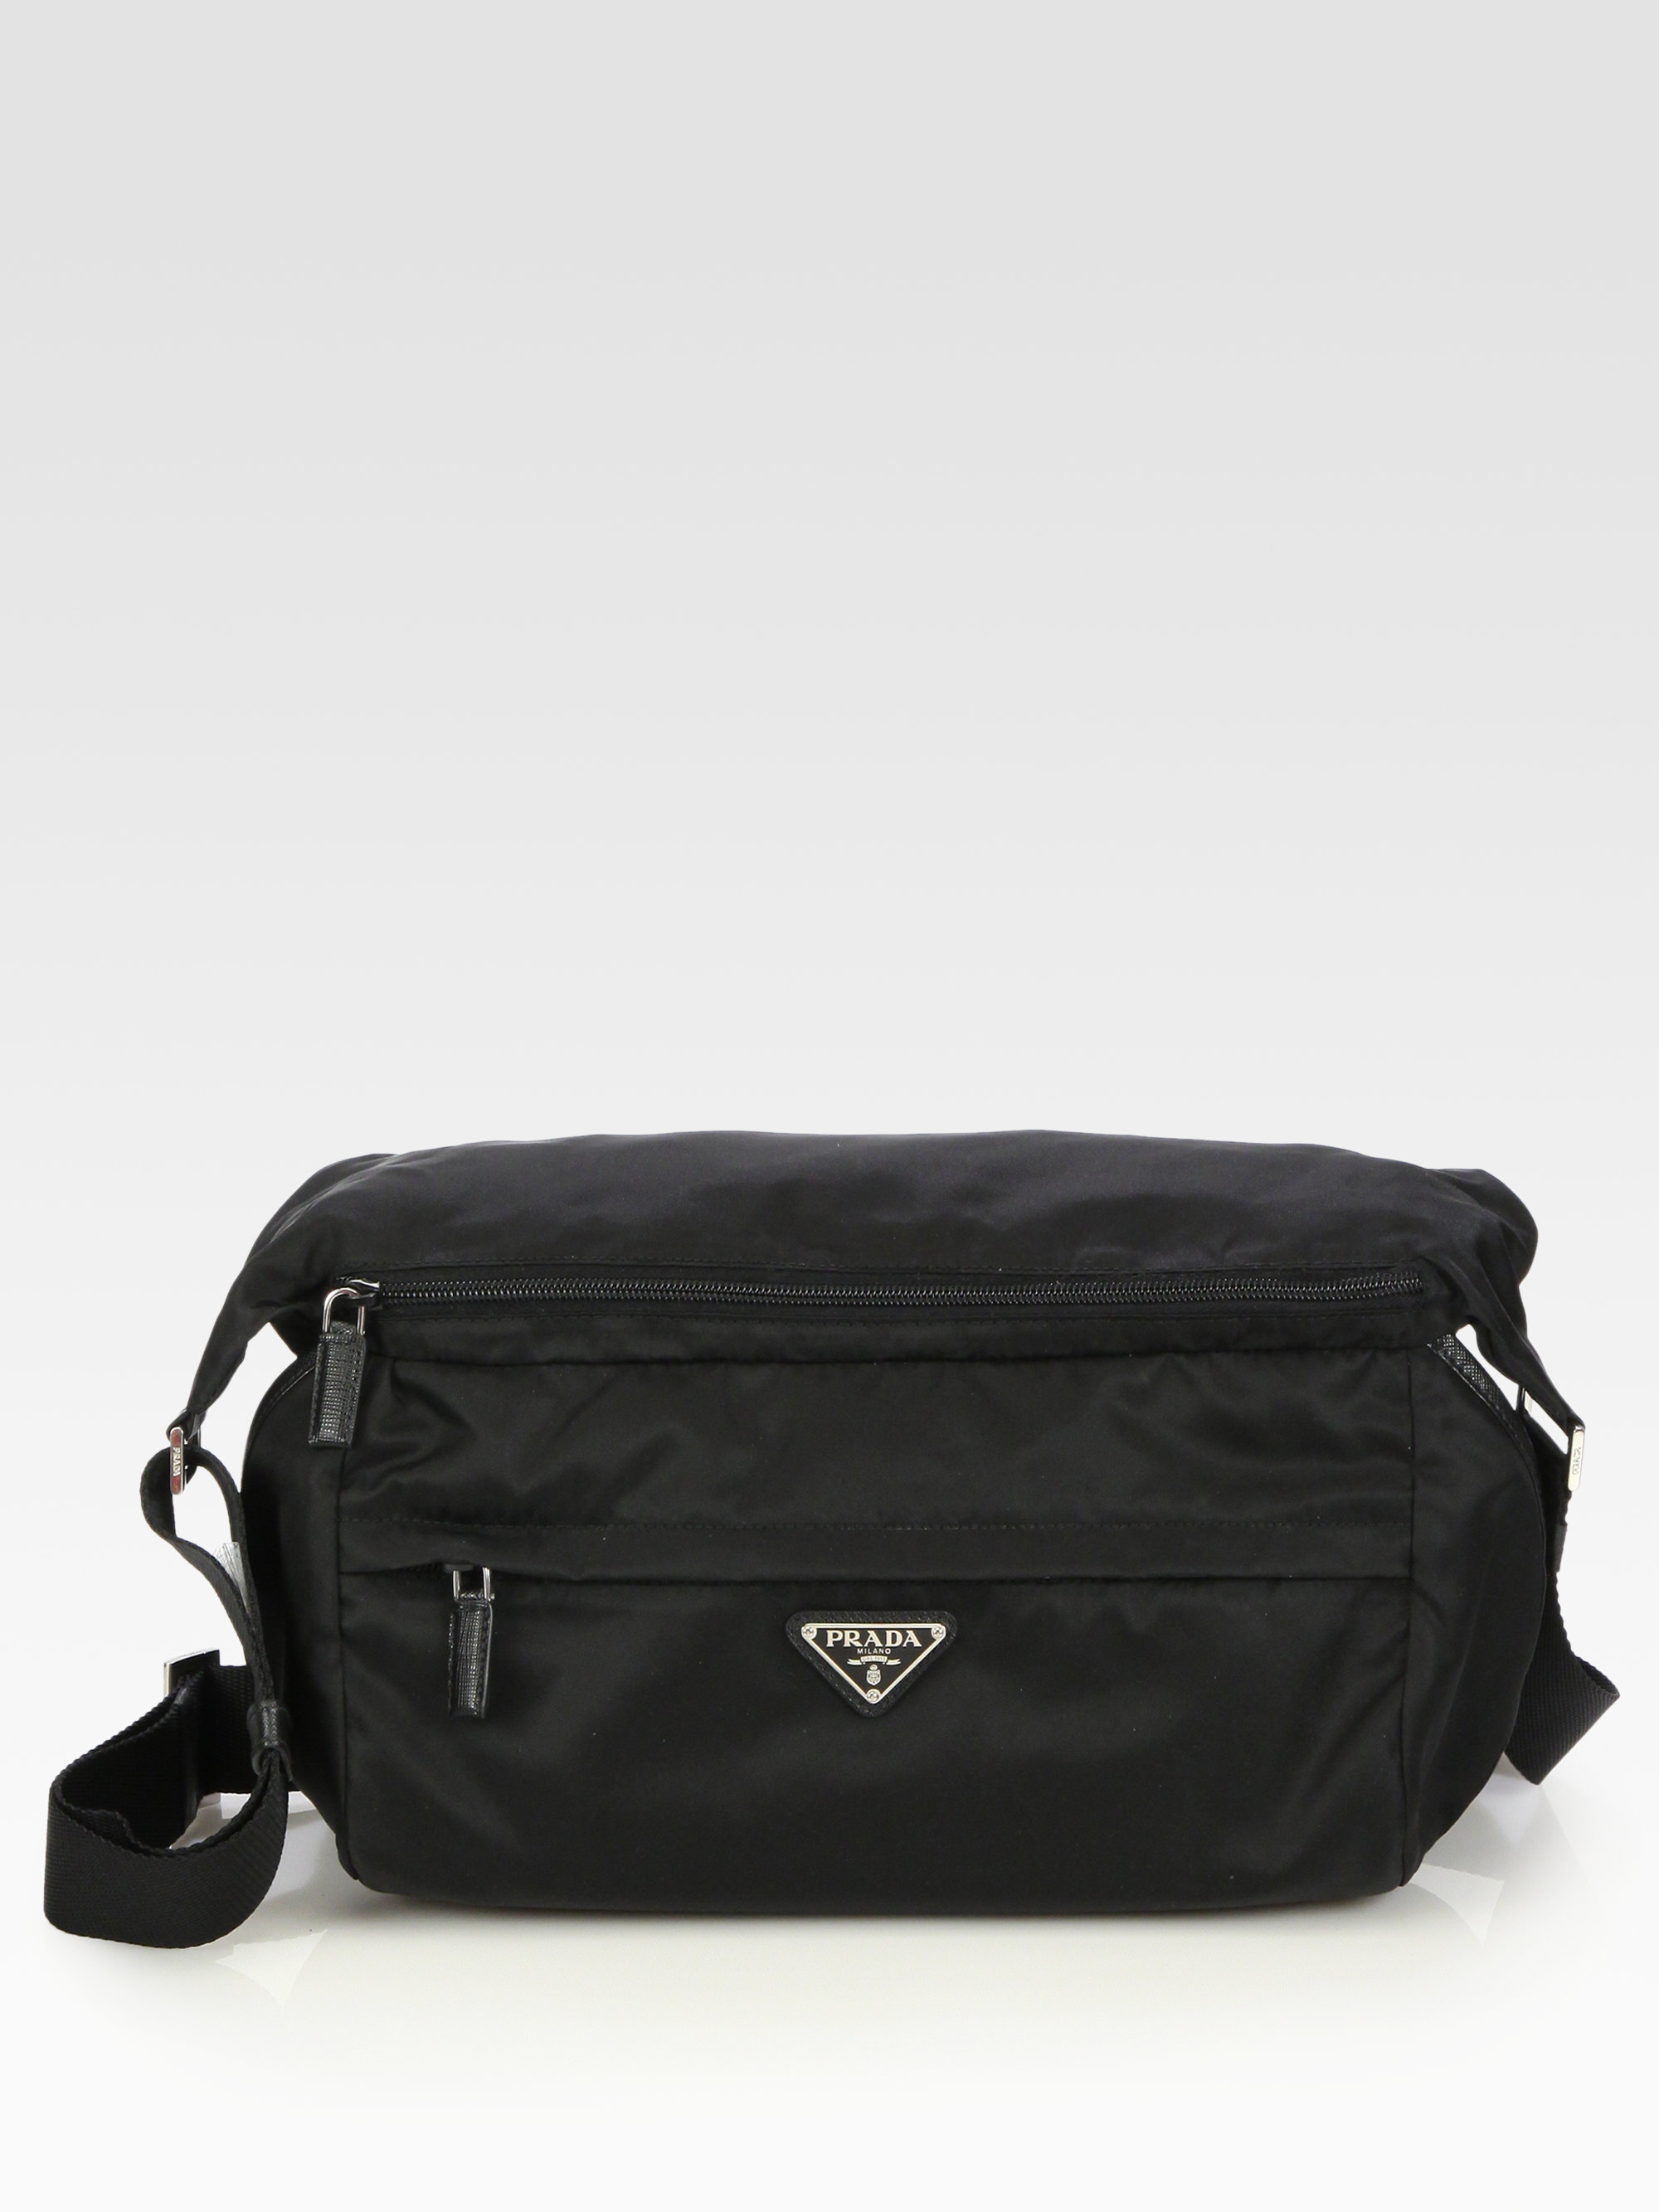 Prada Small Nylon Shoulder Bag in Black for Men - Lyst